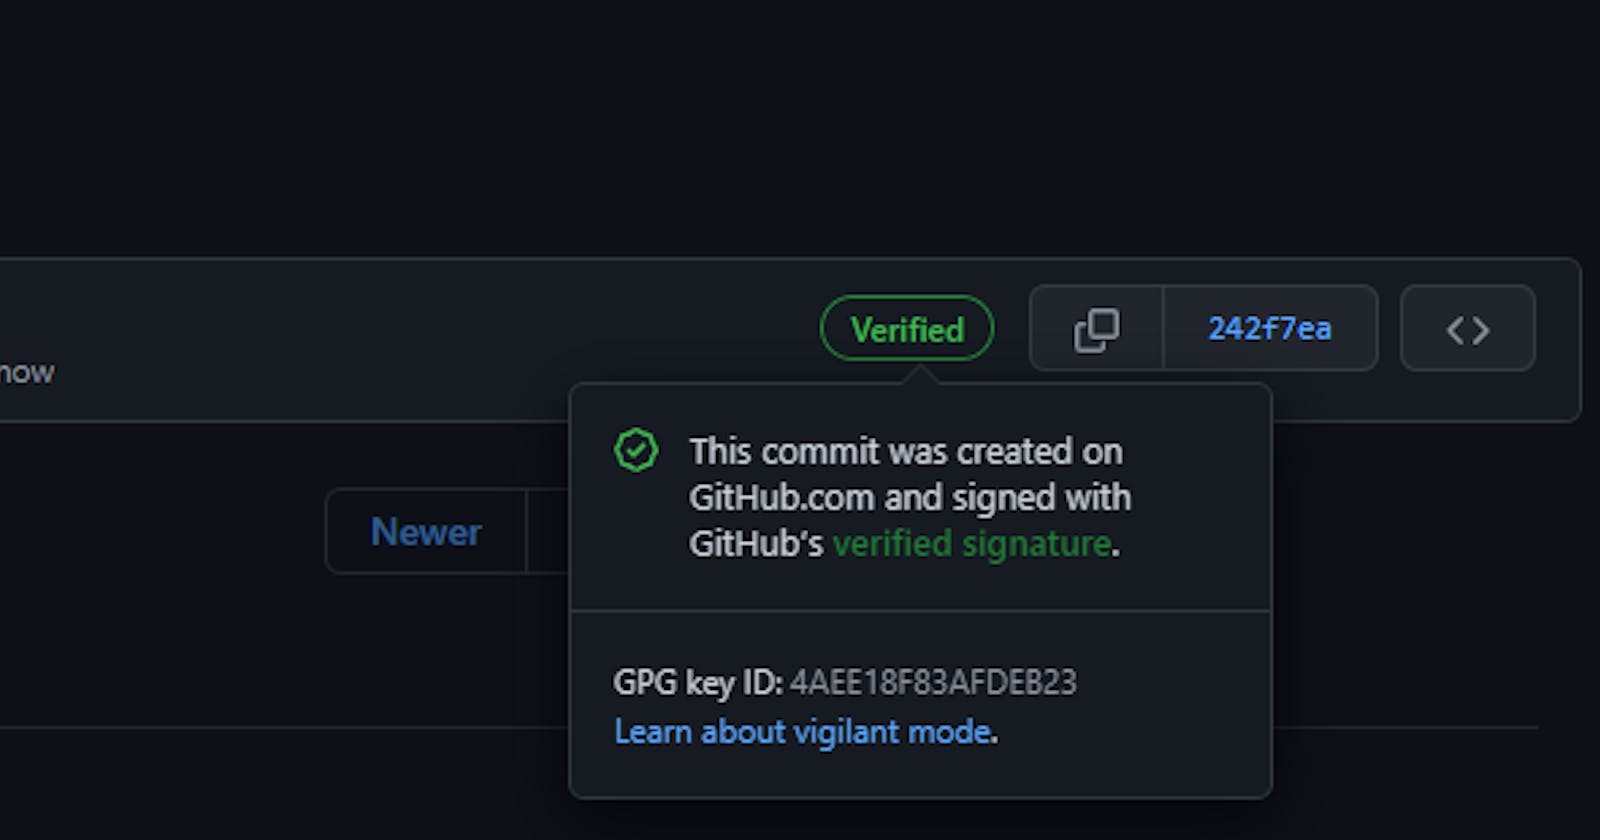 How to configure verified GitHub commits?